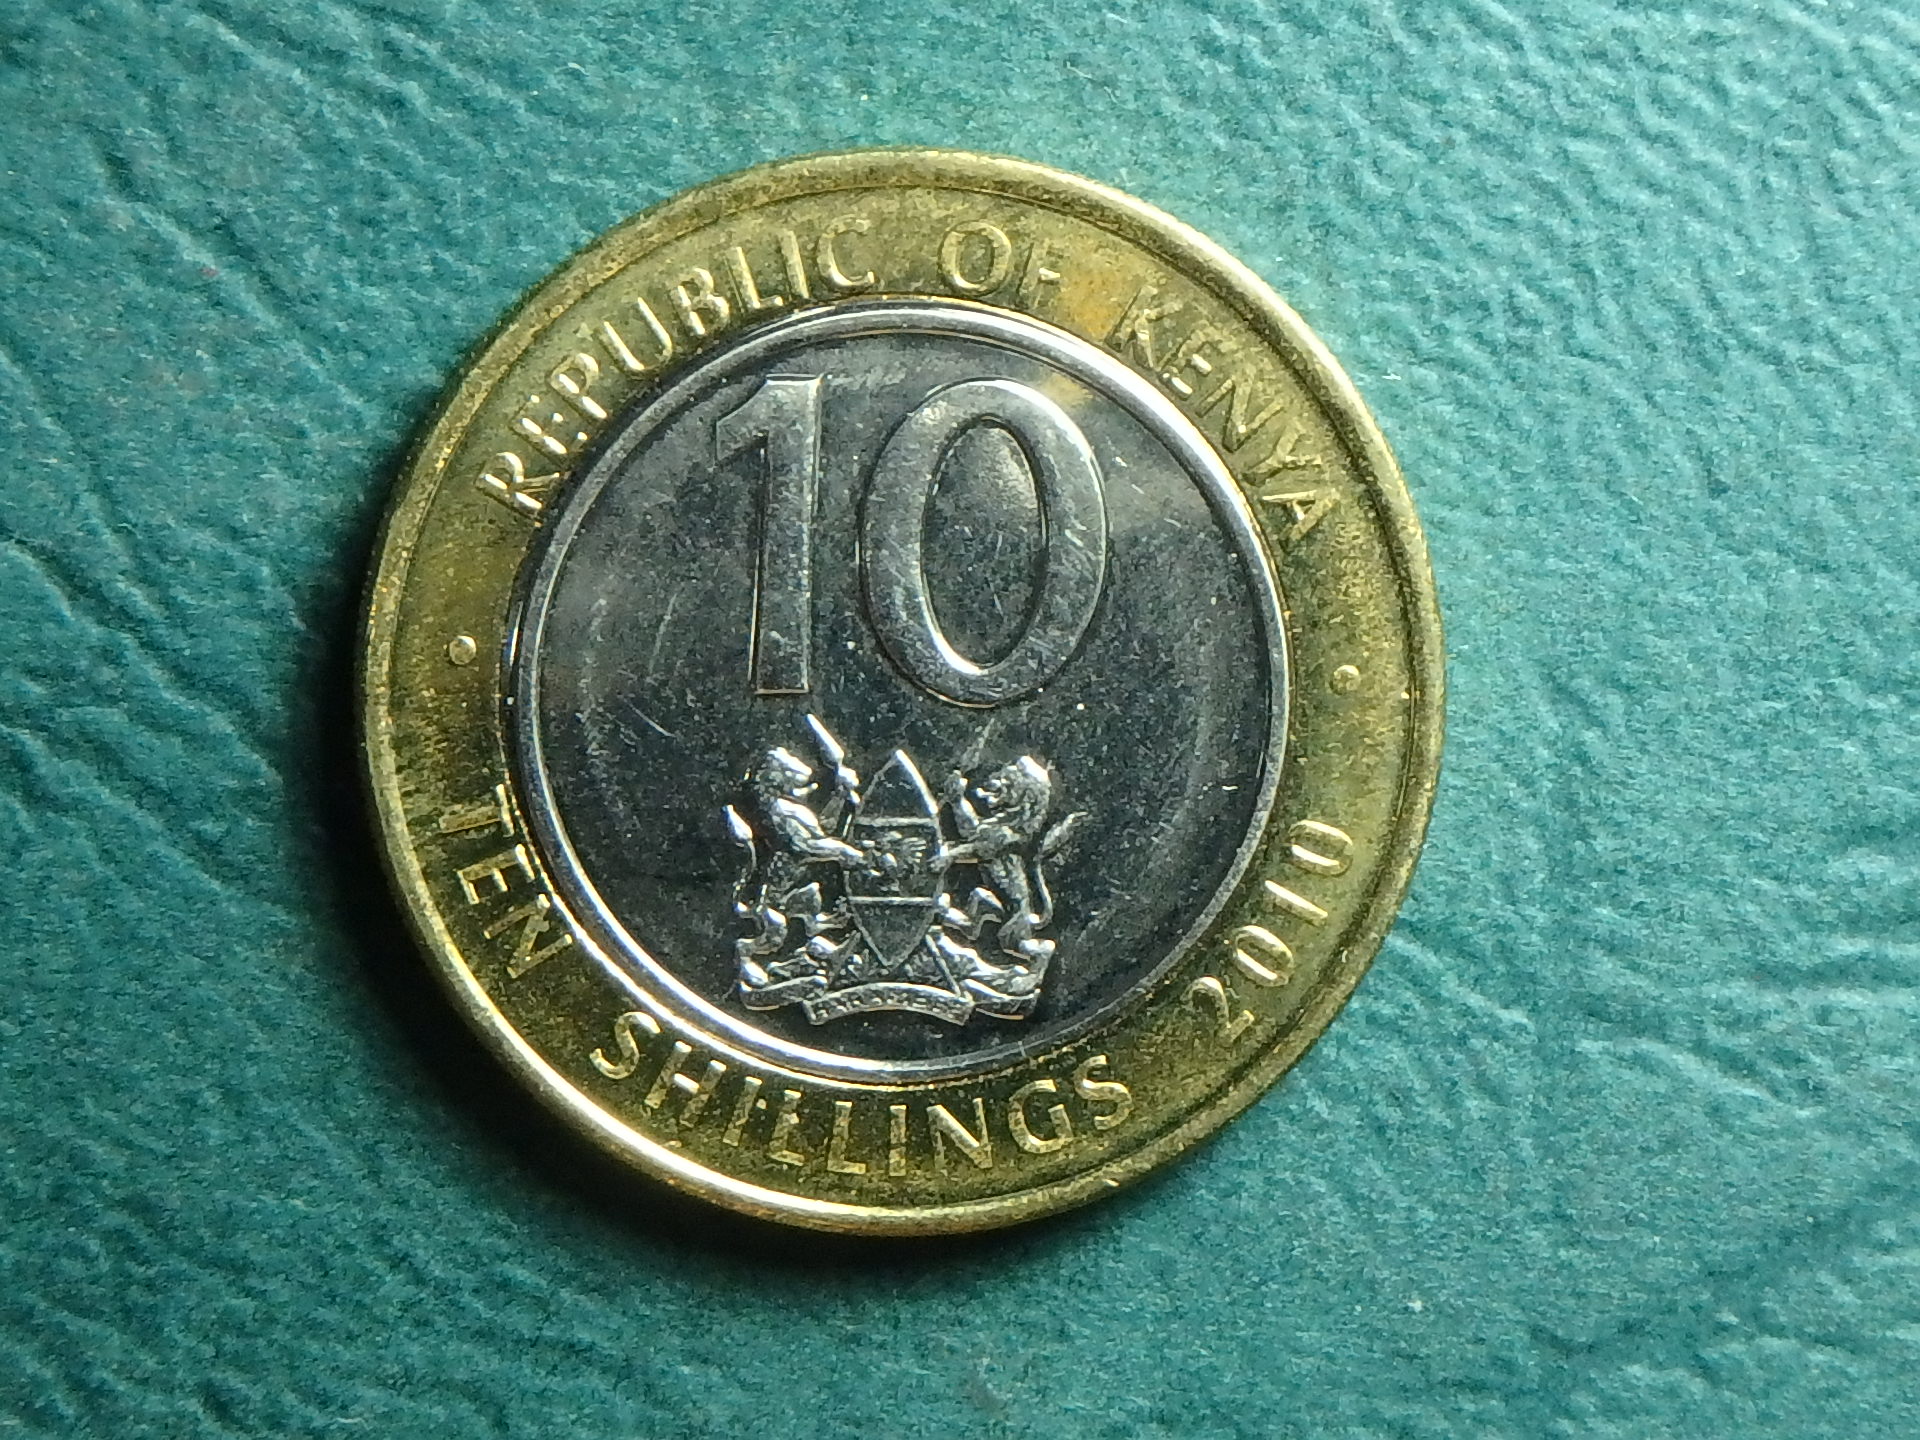 2010 Kenya 10 s rev.JPG